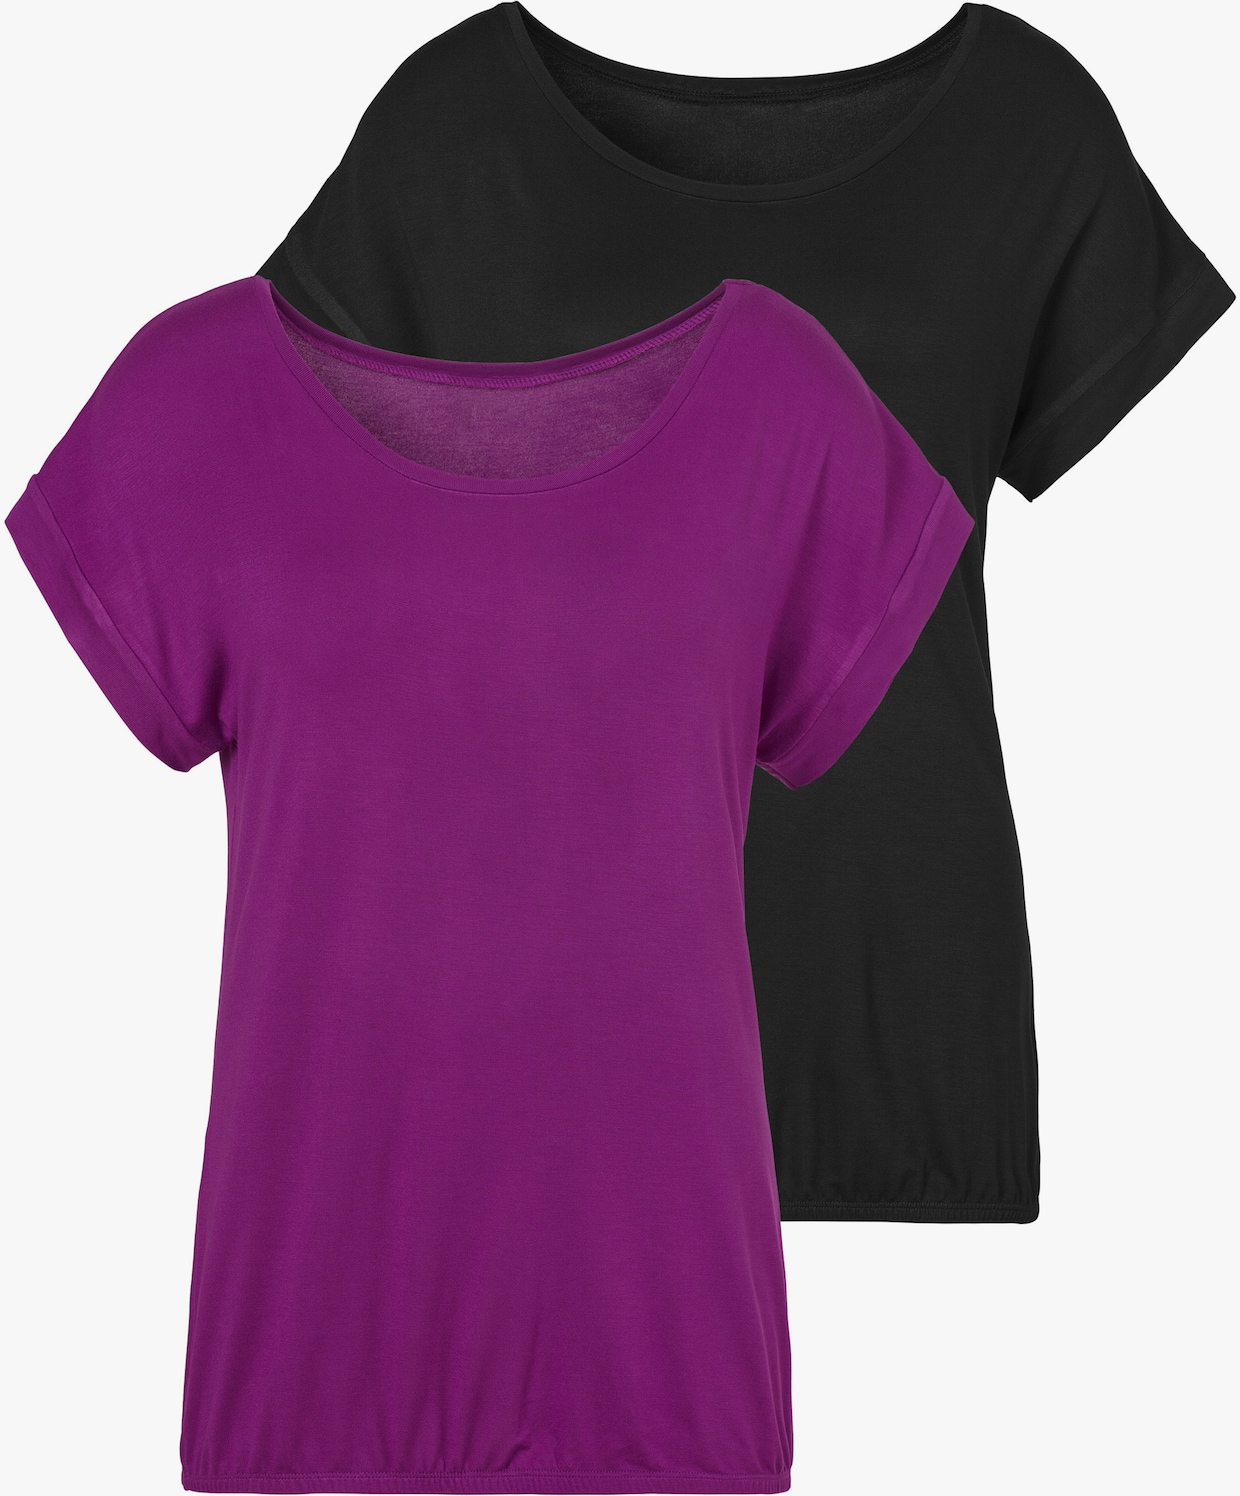 Vivance T-Shirt - lila, schwarz